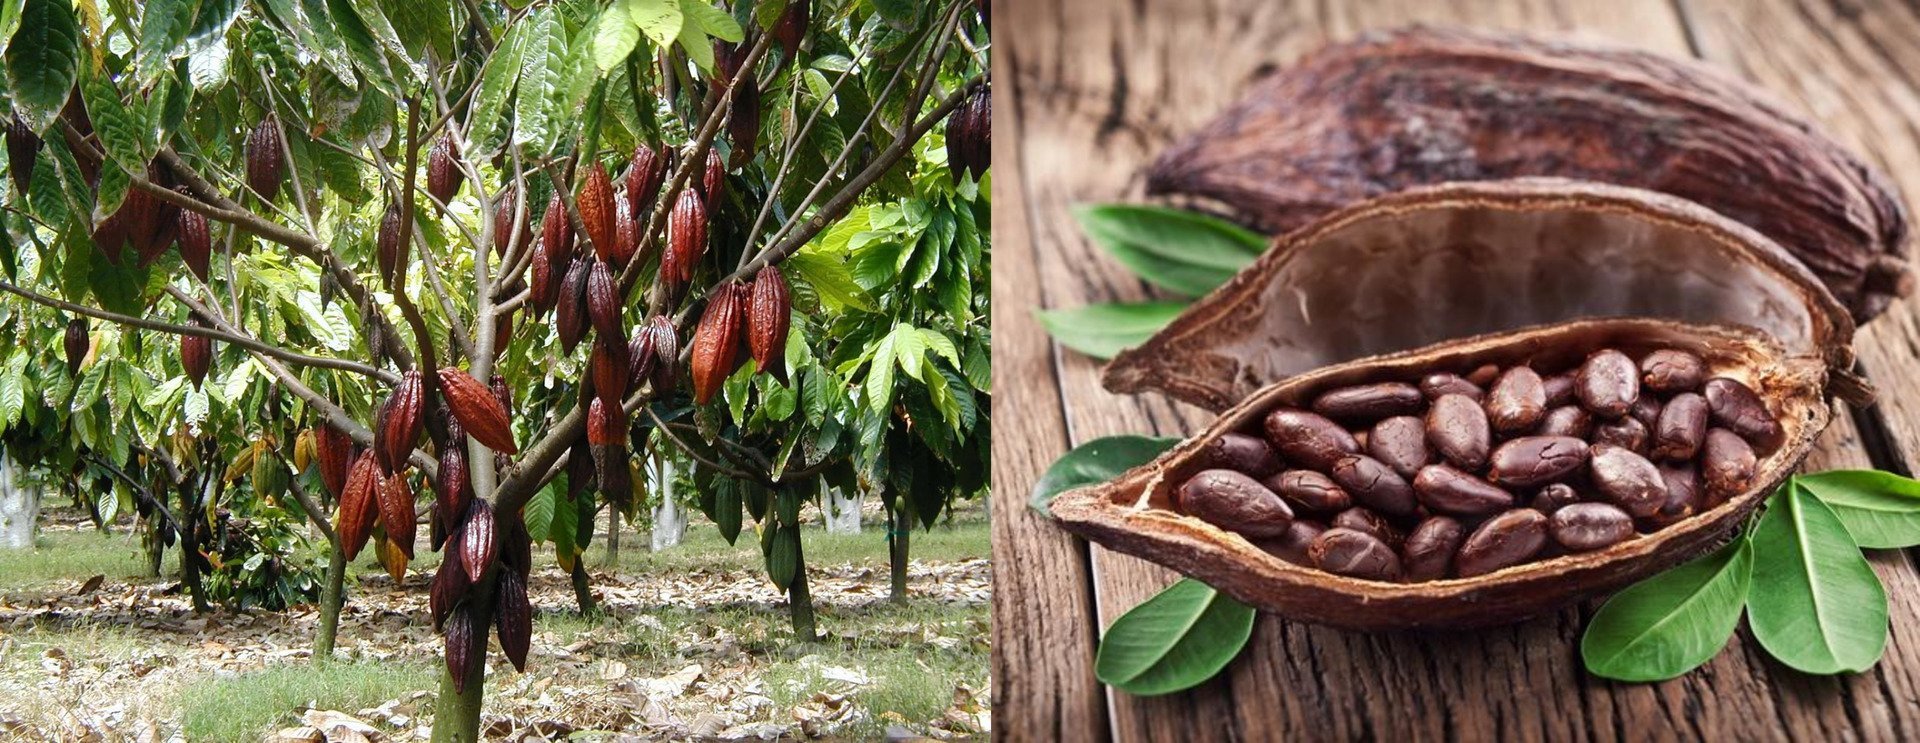 Южная Америка плантации какао